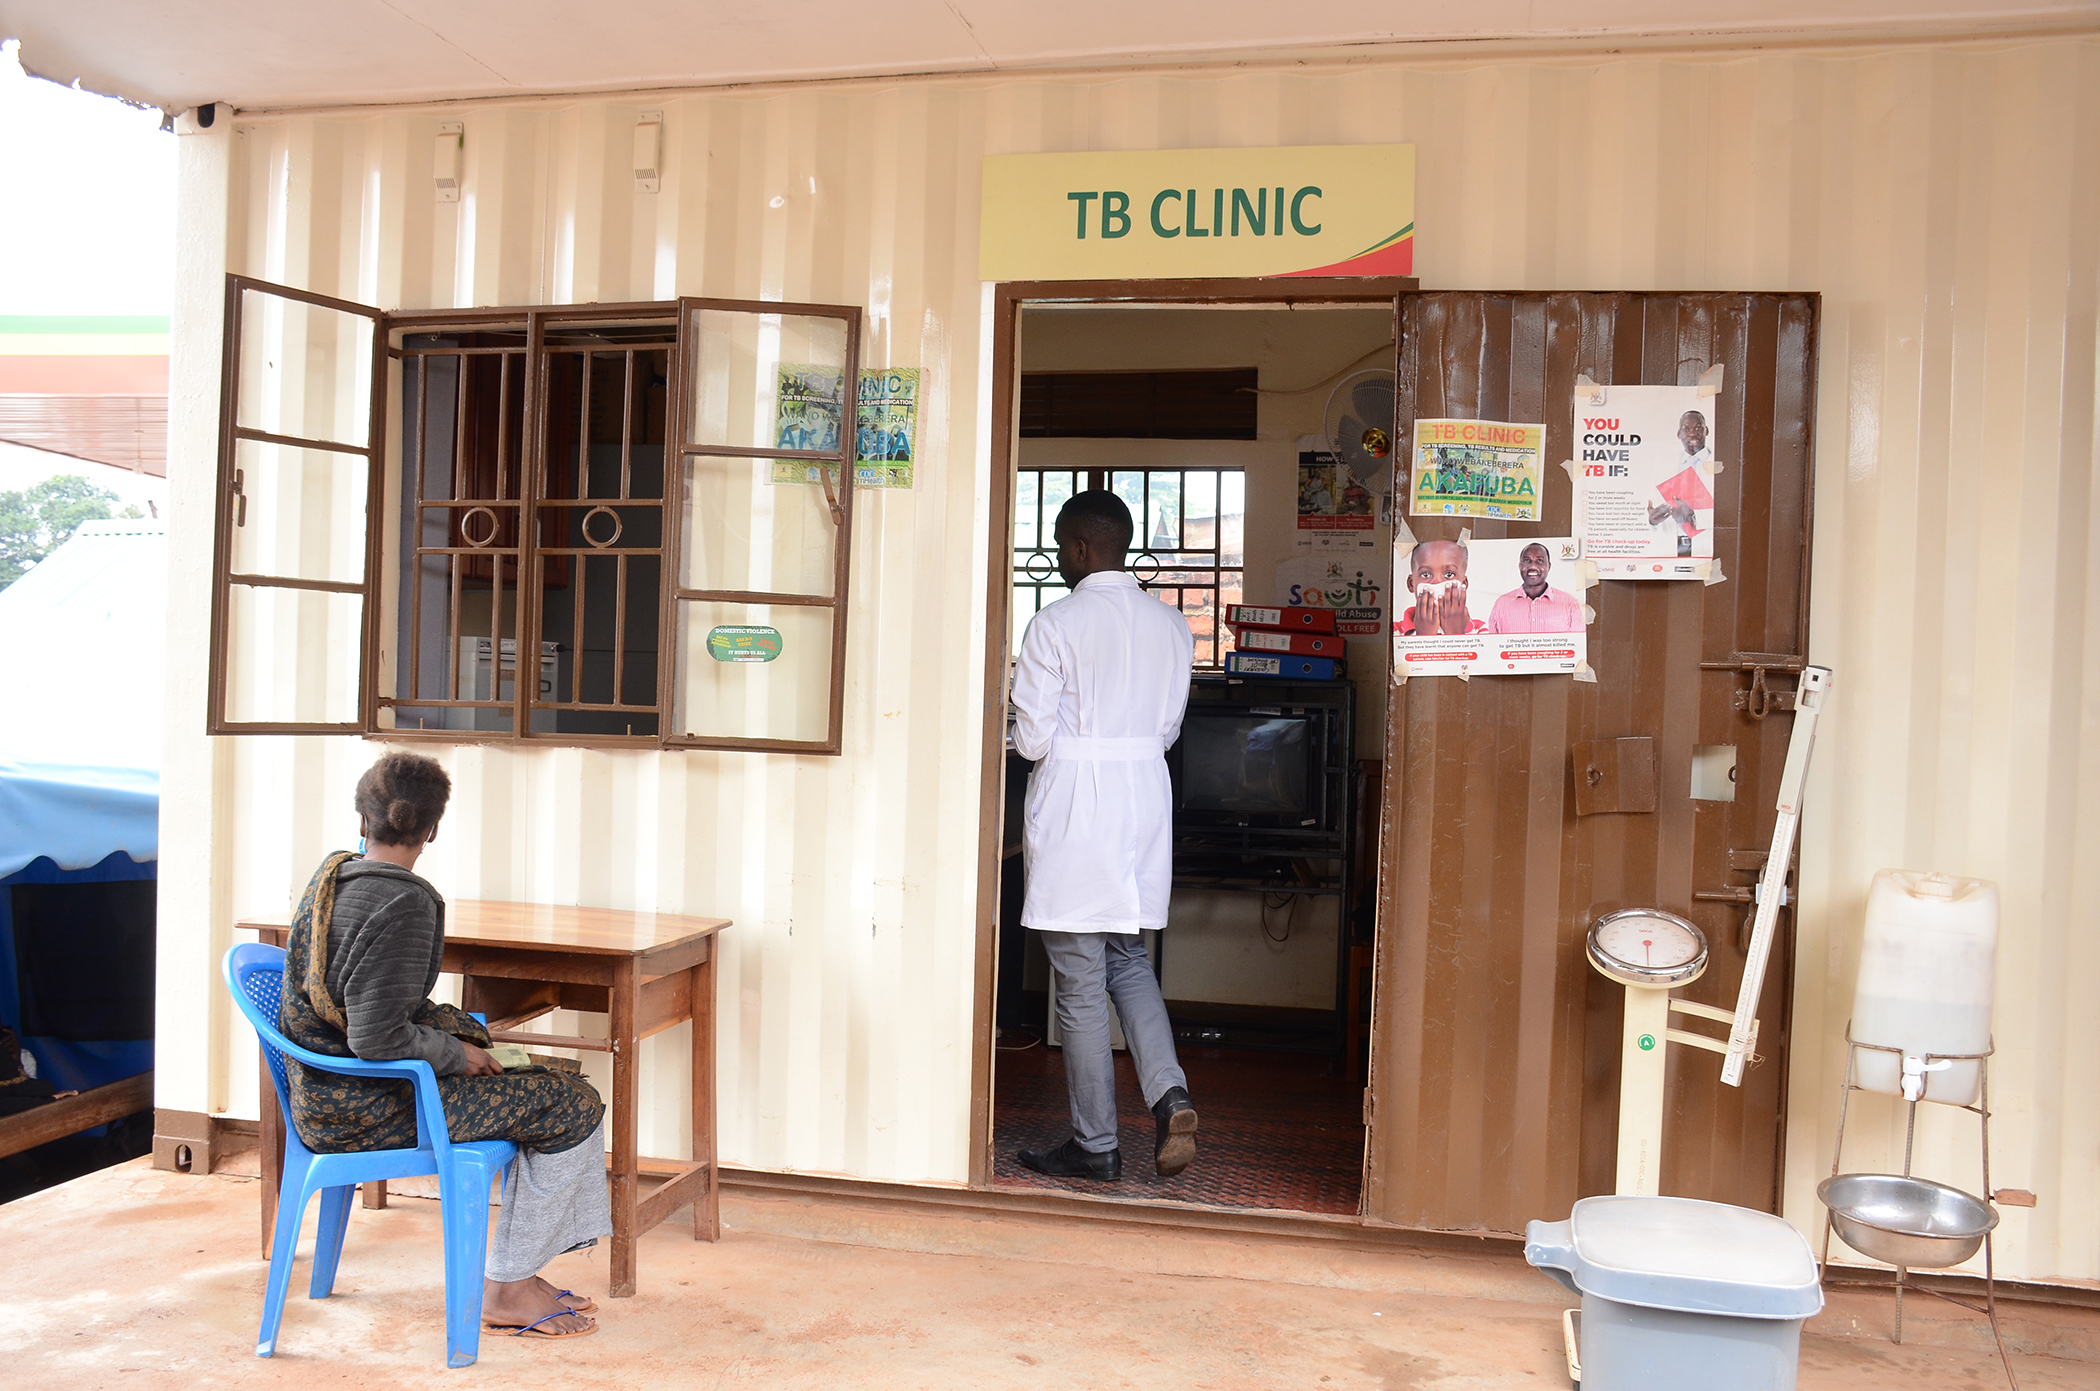 A TB clinic in Uganda.